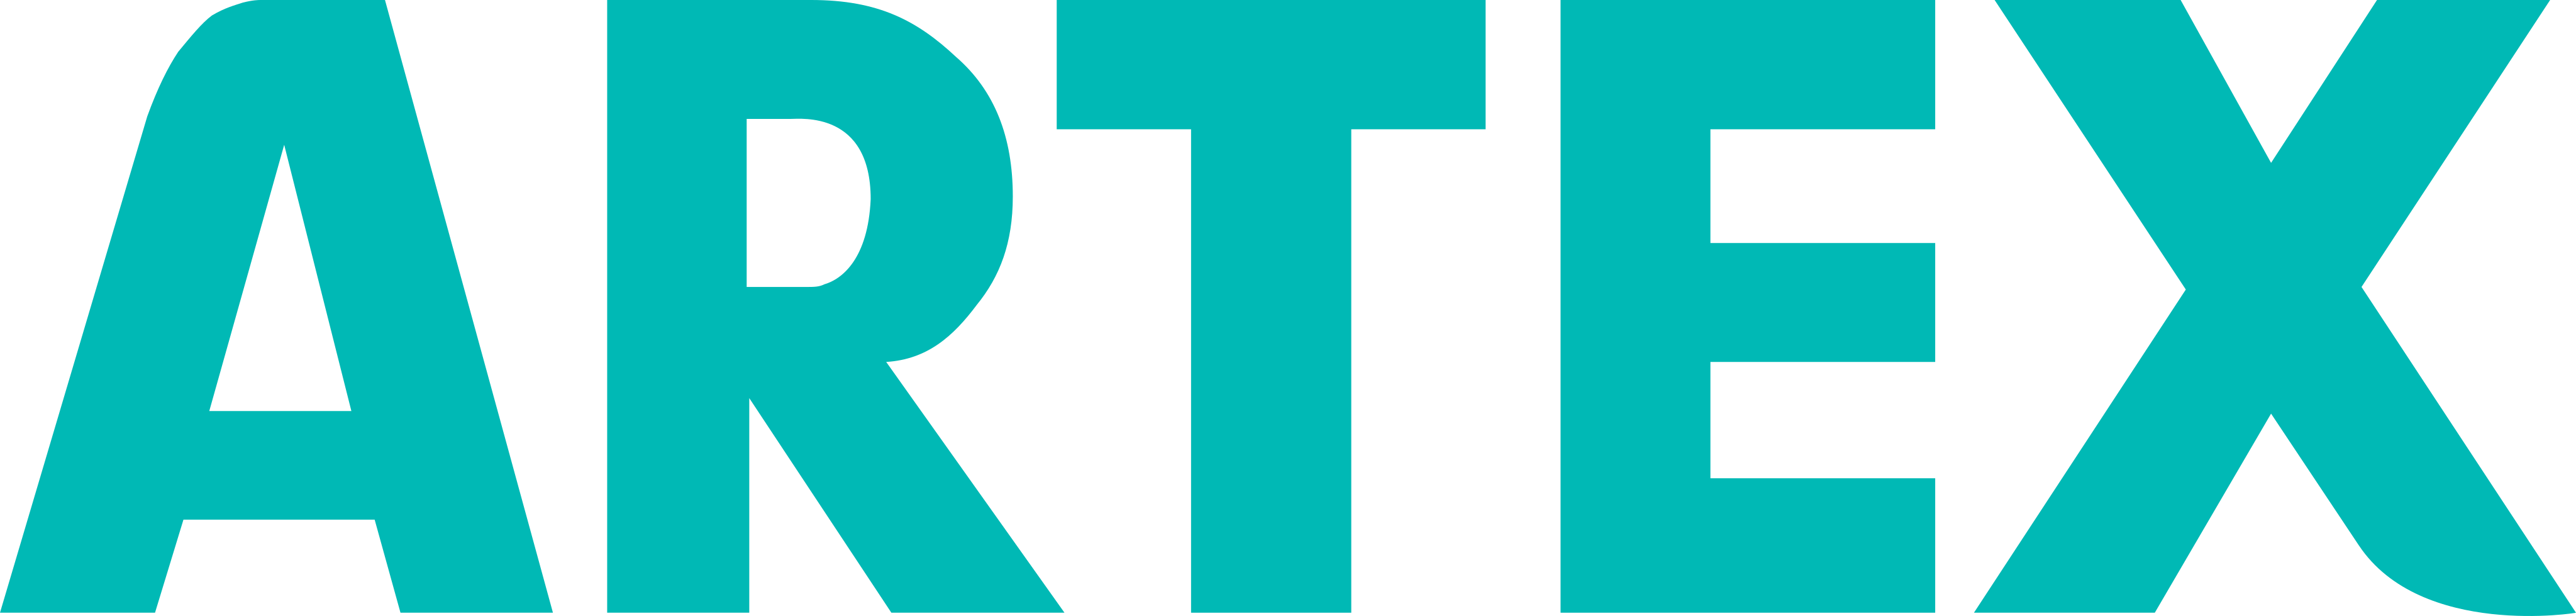 Artex Logo.